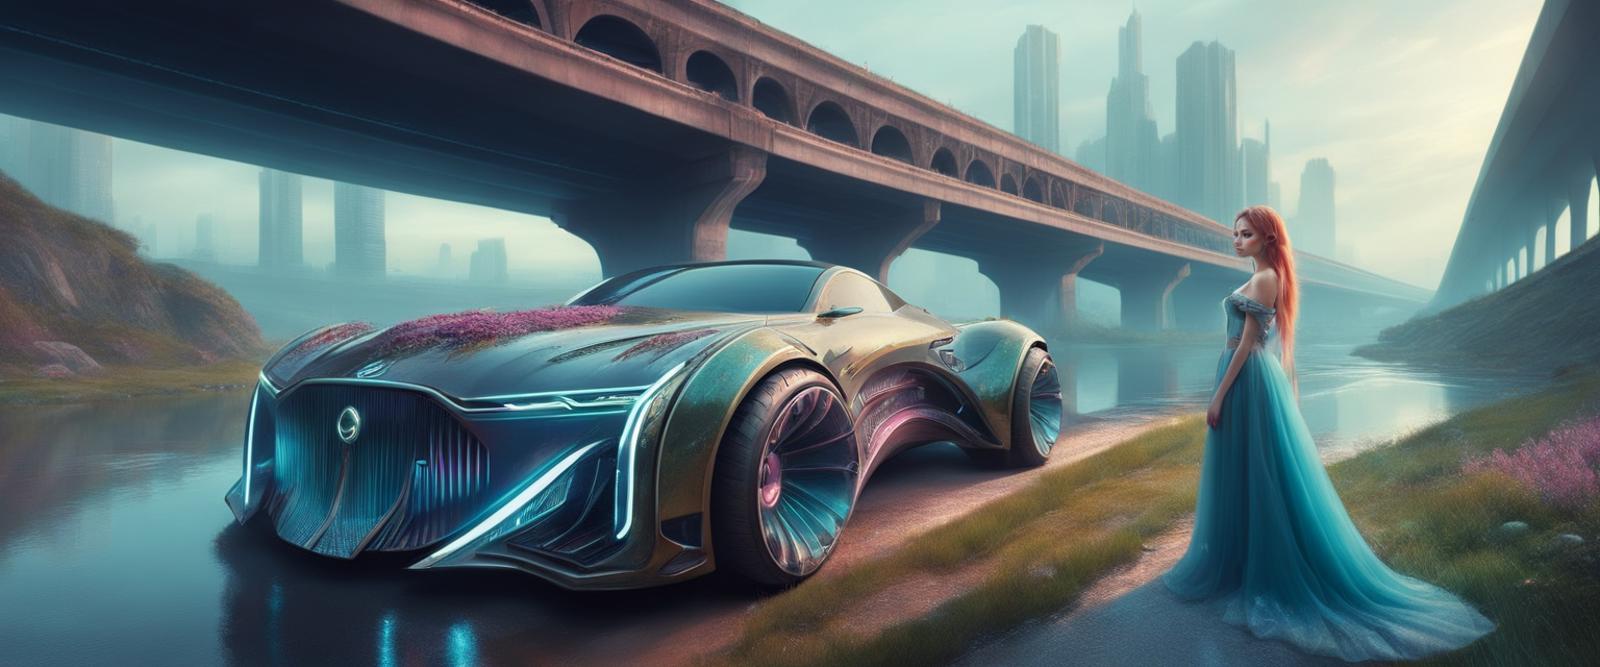 futuristic_cars_SDXL image by Aderek514